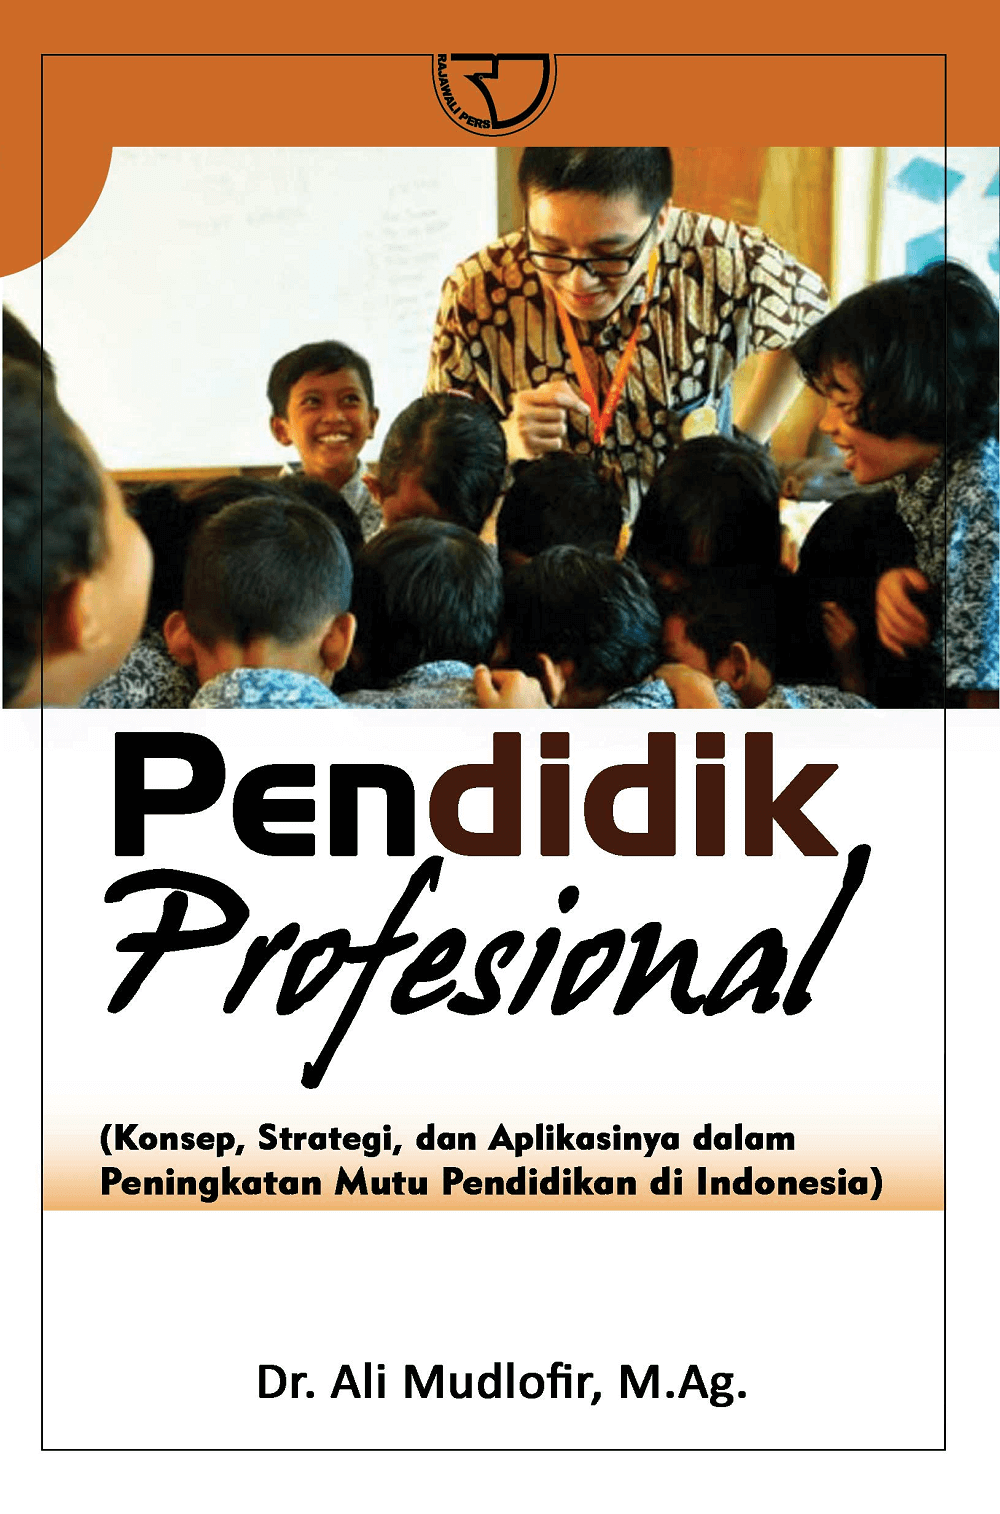 PENDIDIK PROFESIONAL: Konsep, Strategi, dan Aplikasinya dalam Peningkatan Mutu Pendidikan di Indonesia